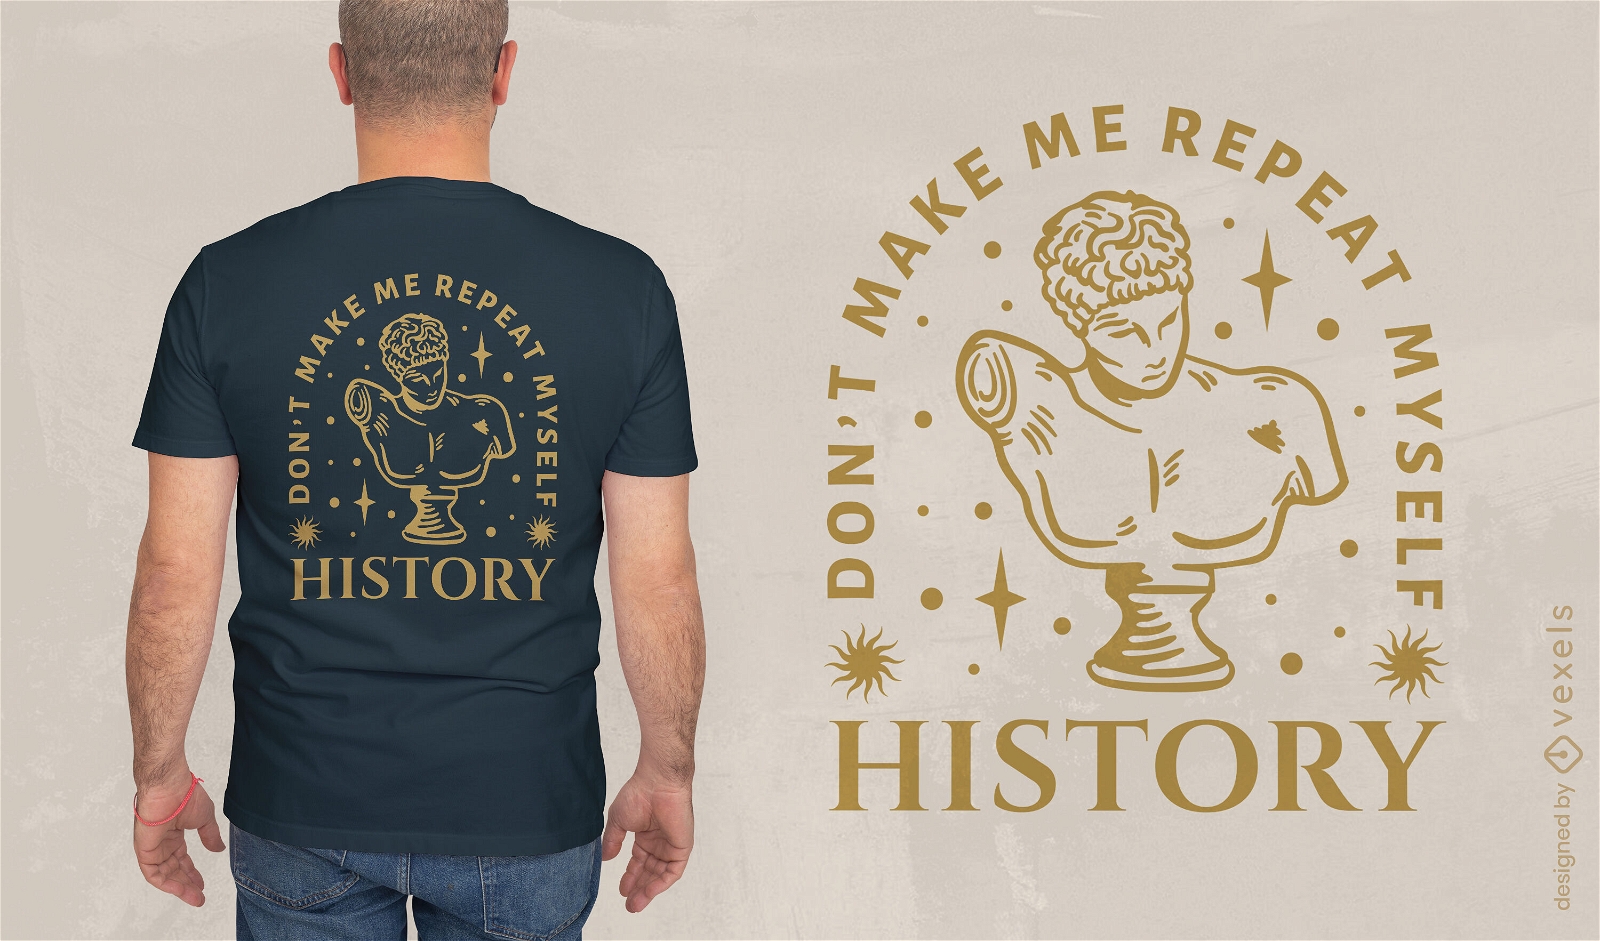 History lover t-shirt design